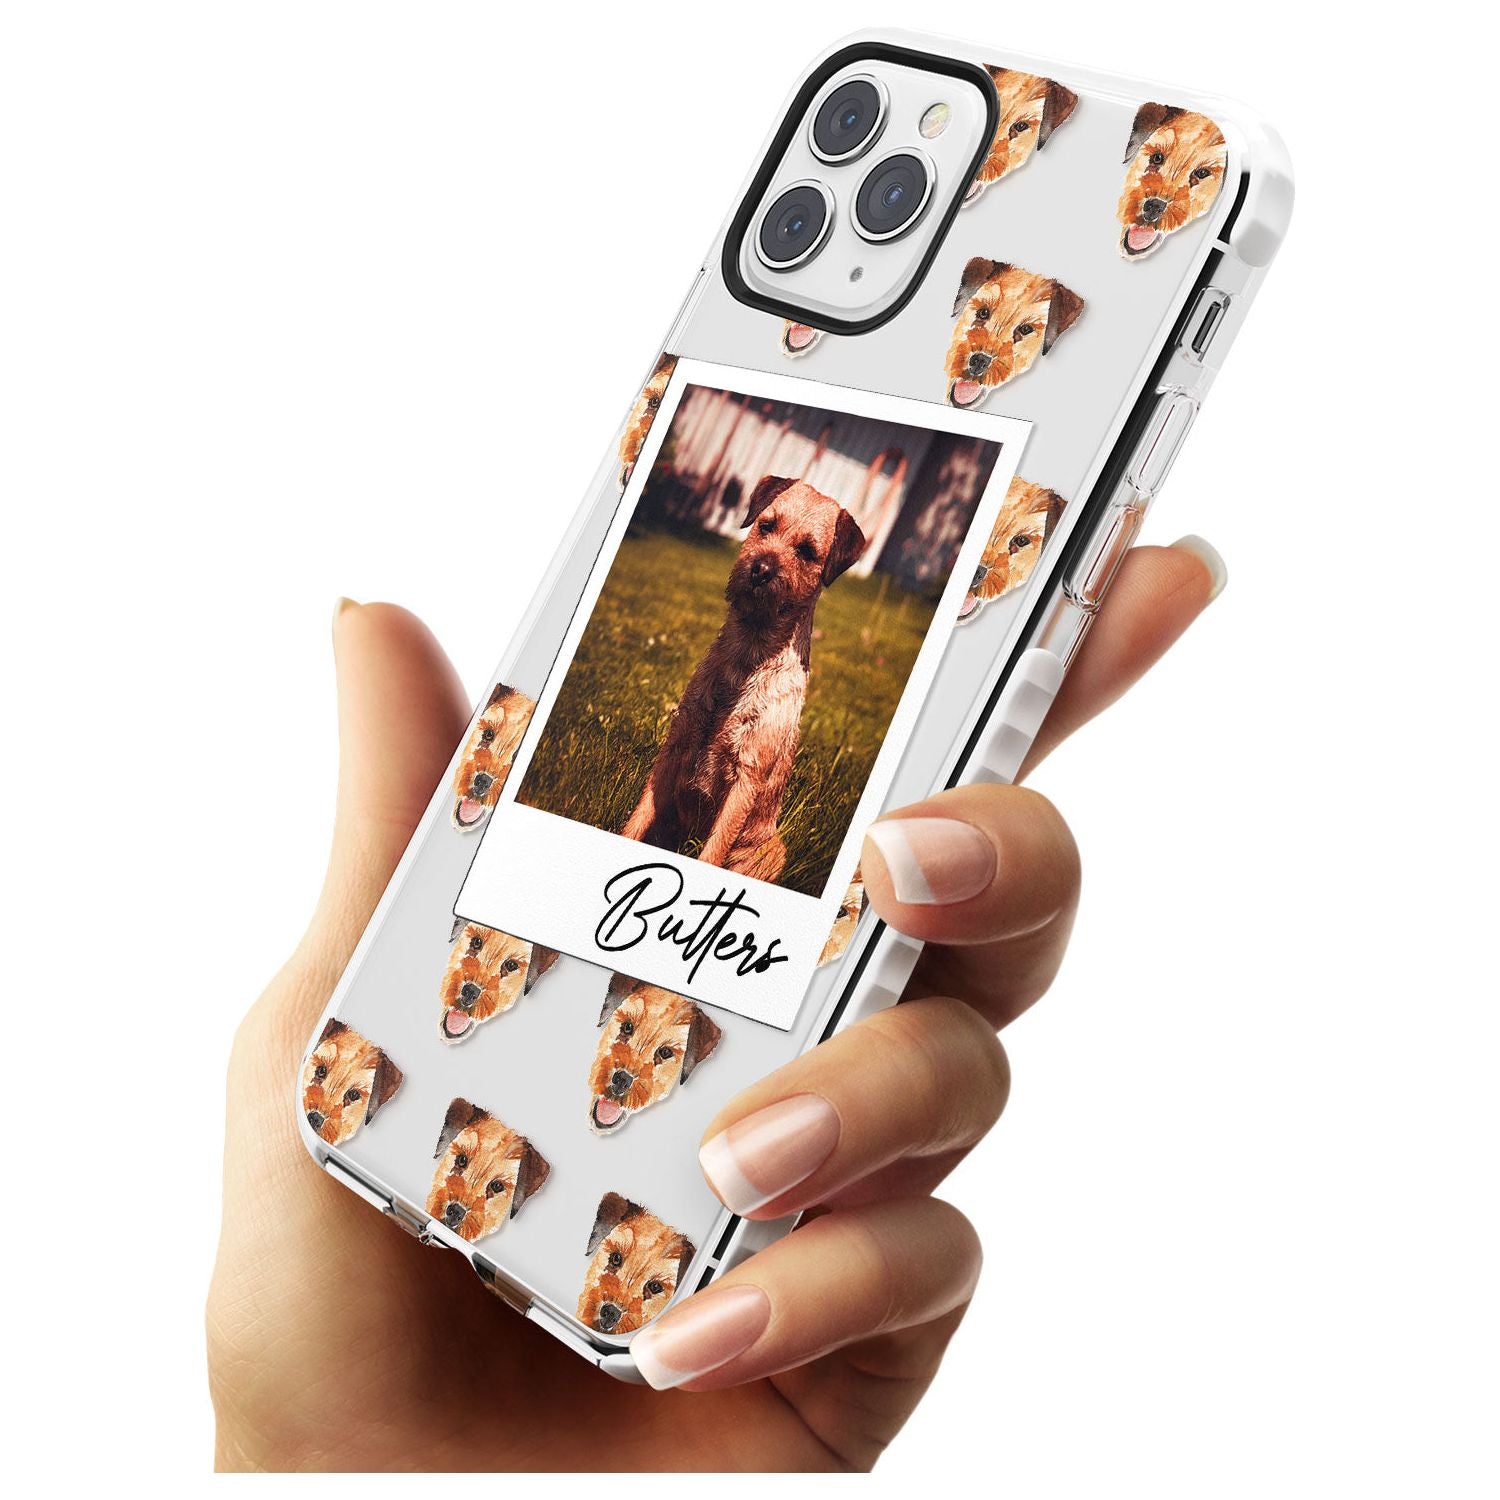 Border Terrier - Custom Dog Photo Slim TPU Phone Case for iPhone 11 Pro Max